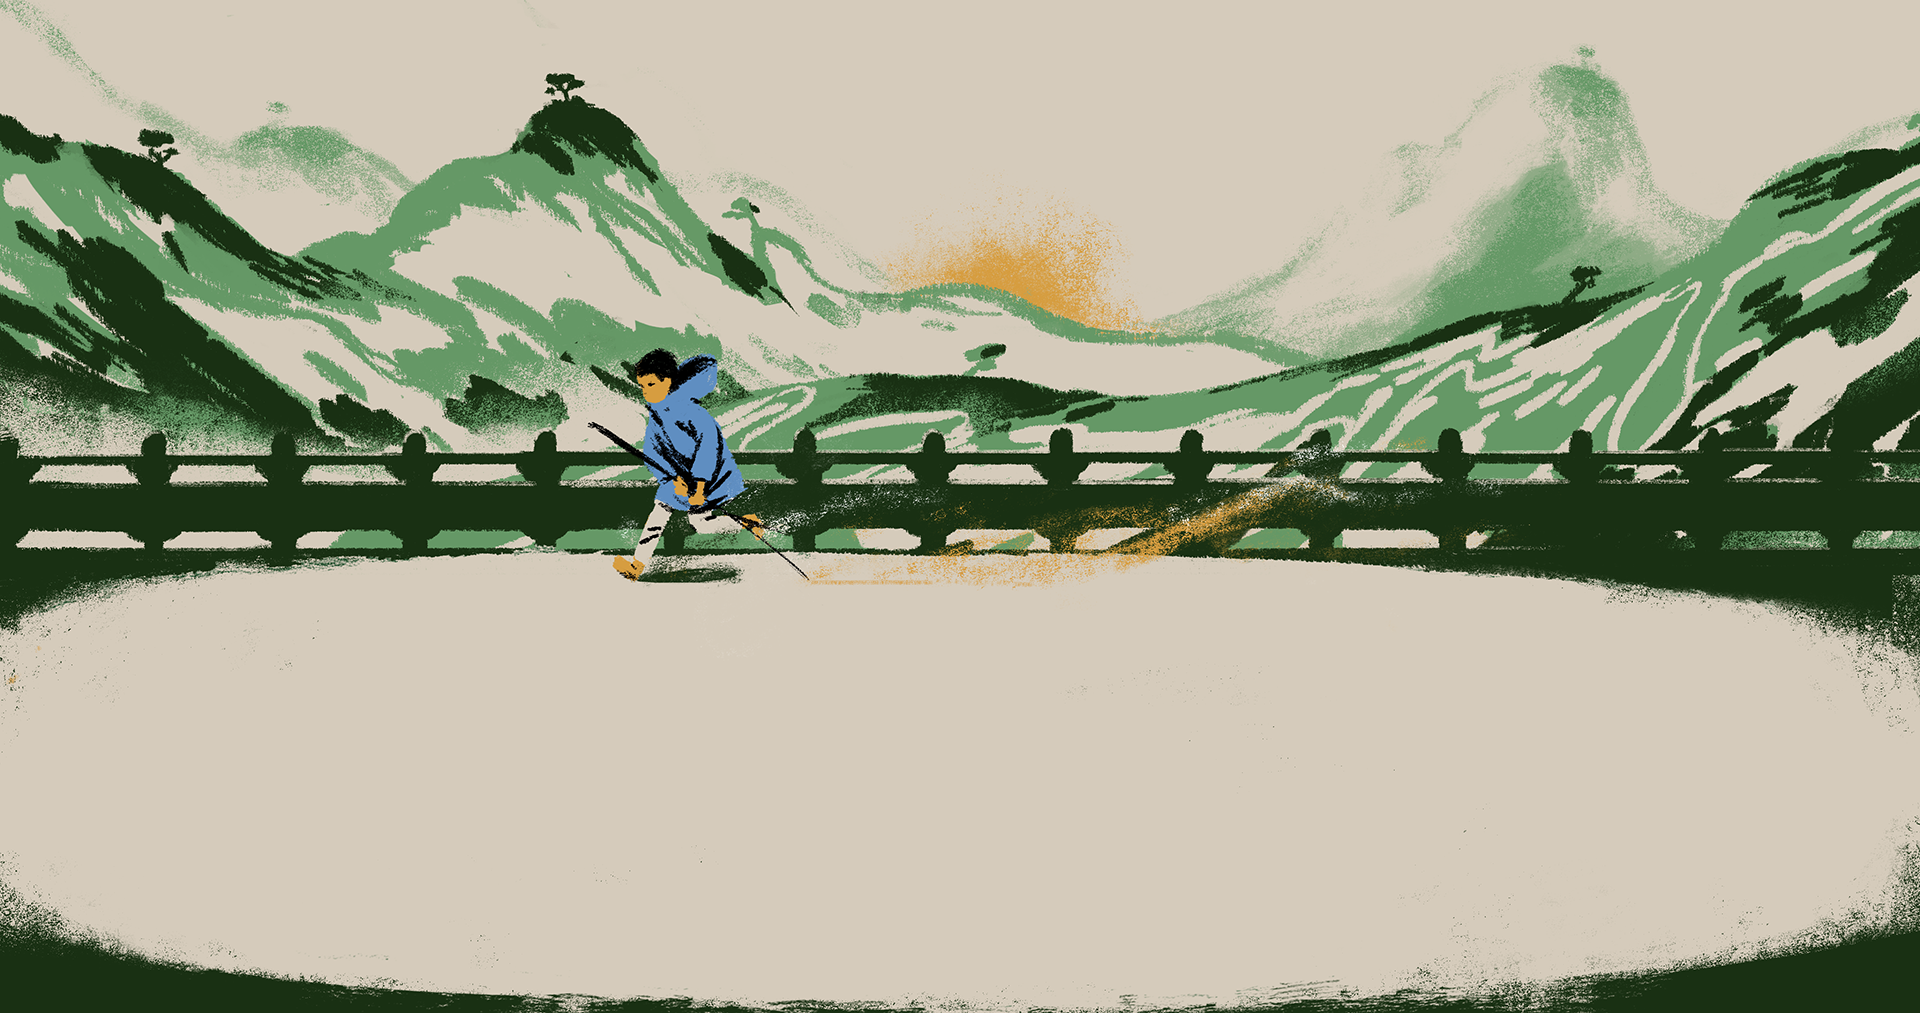 Yunji styleframe boy running in mountains